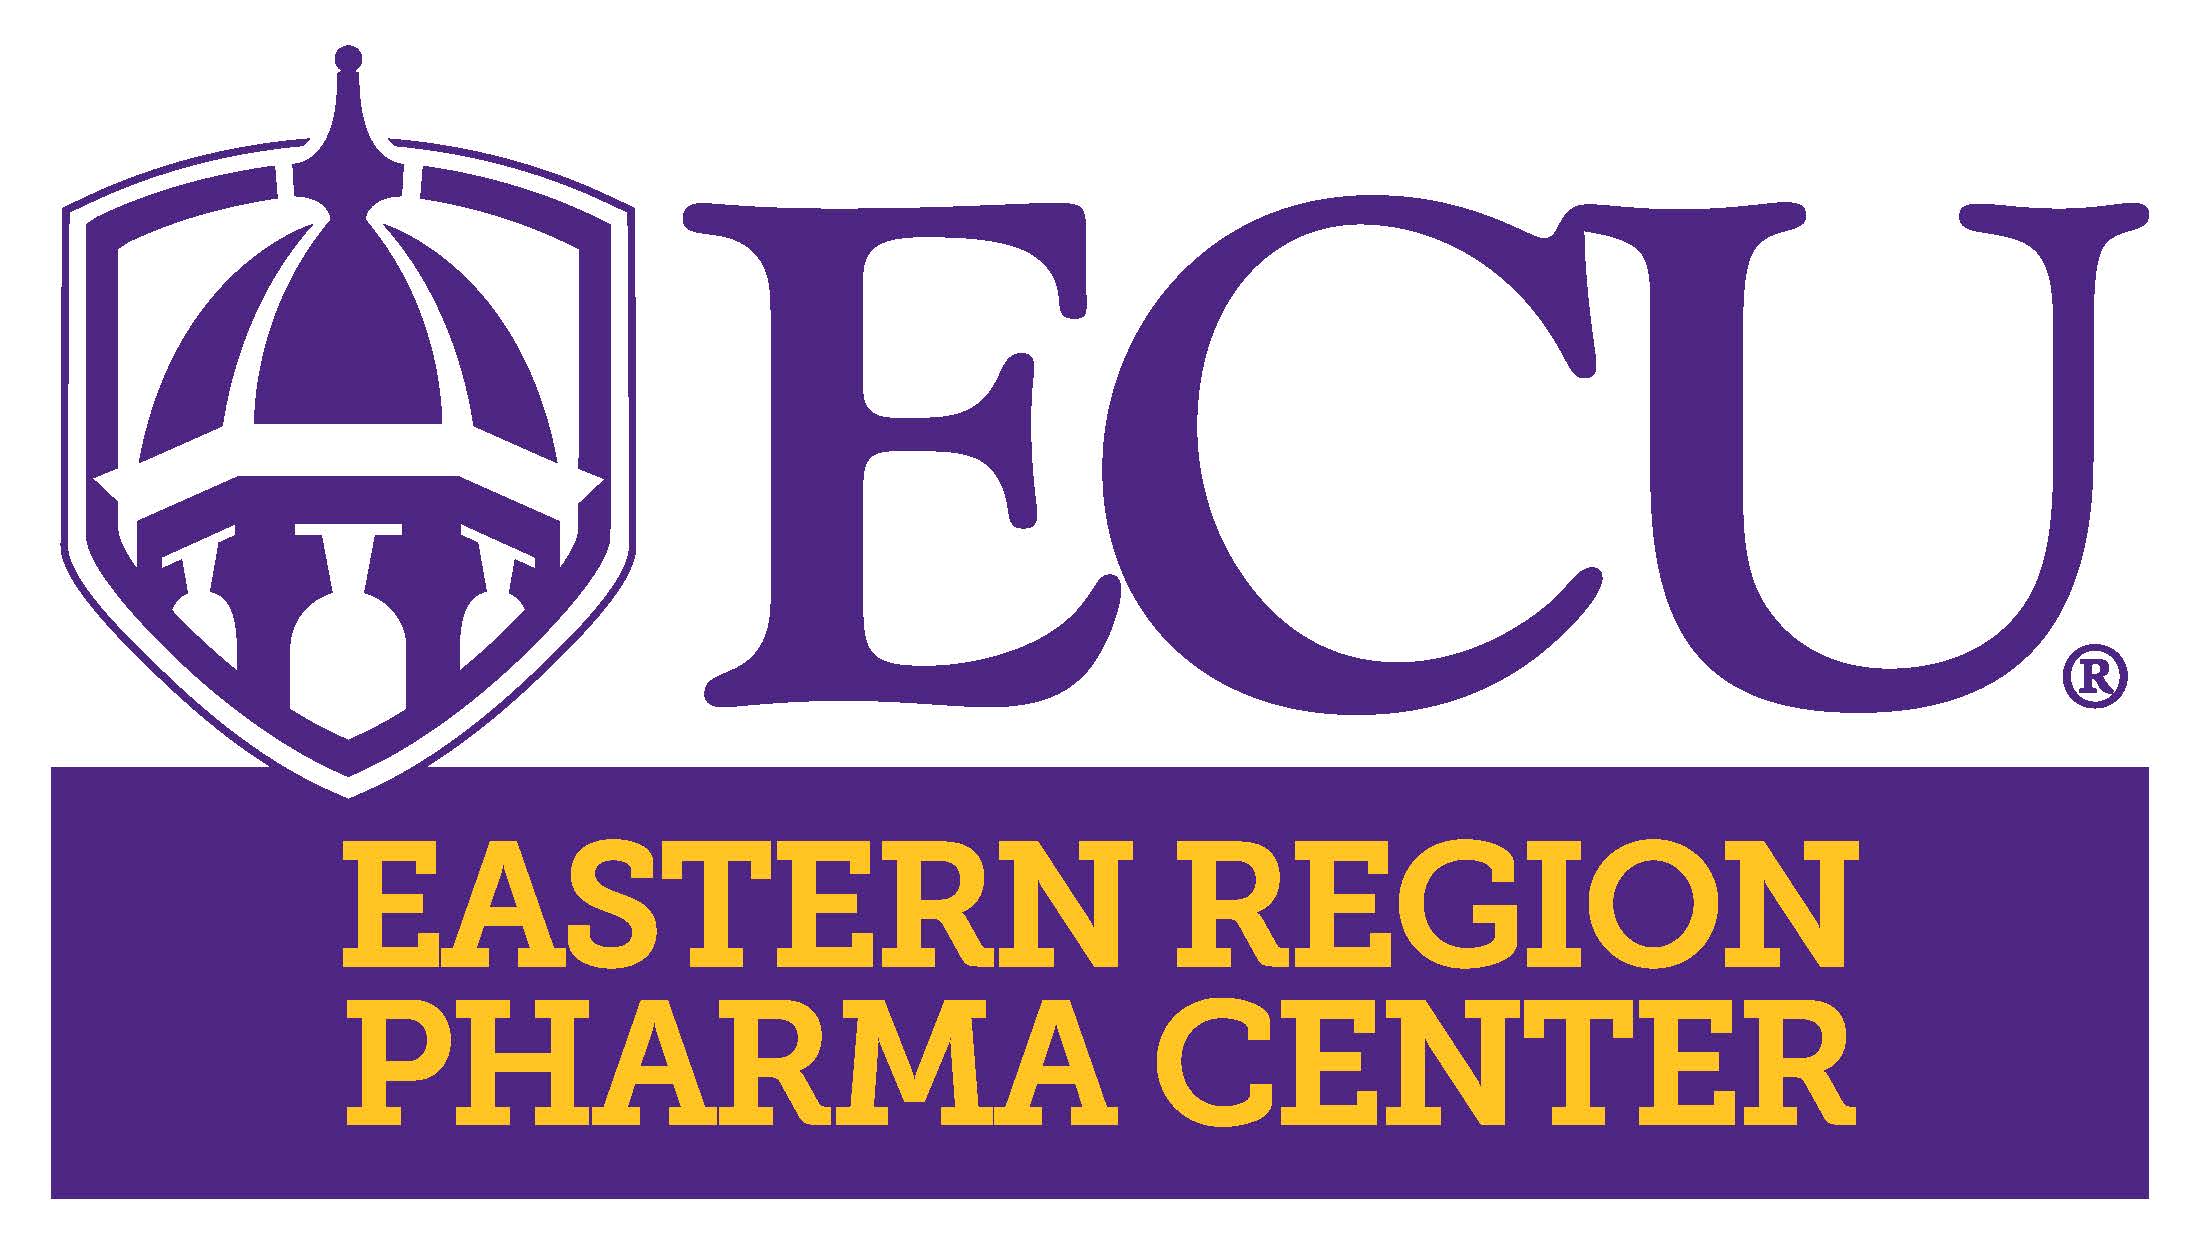 ECU logo with Eastern Region Pharma Center text beneath